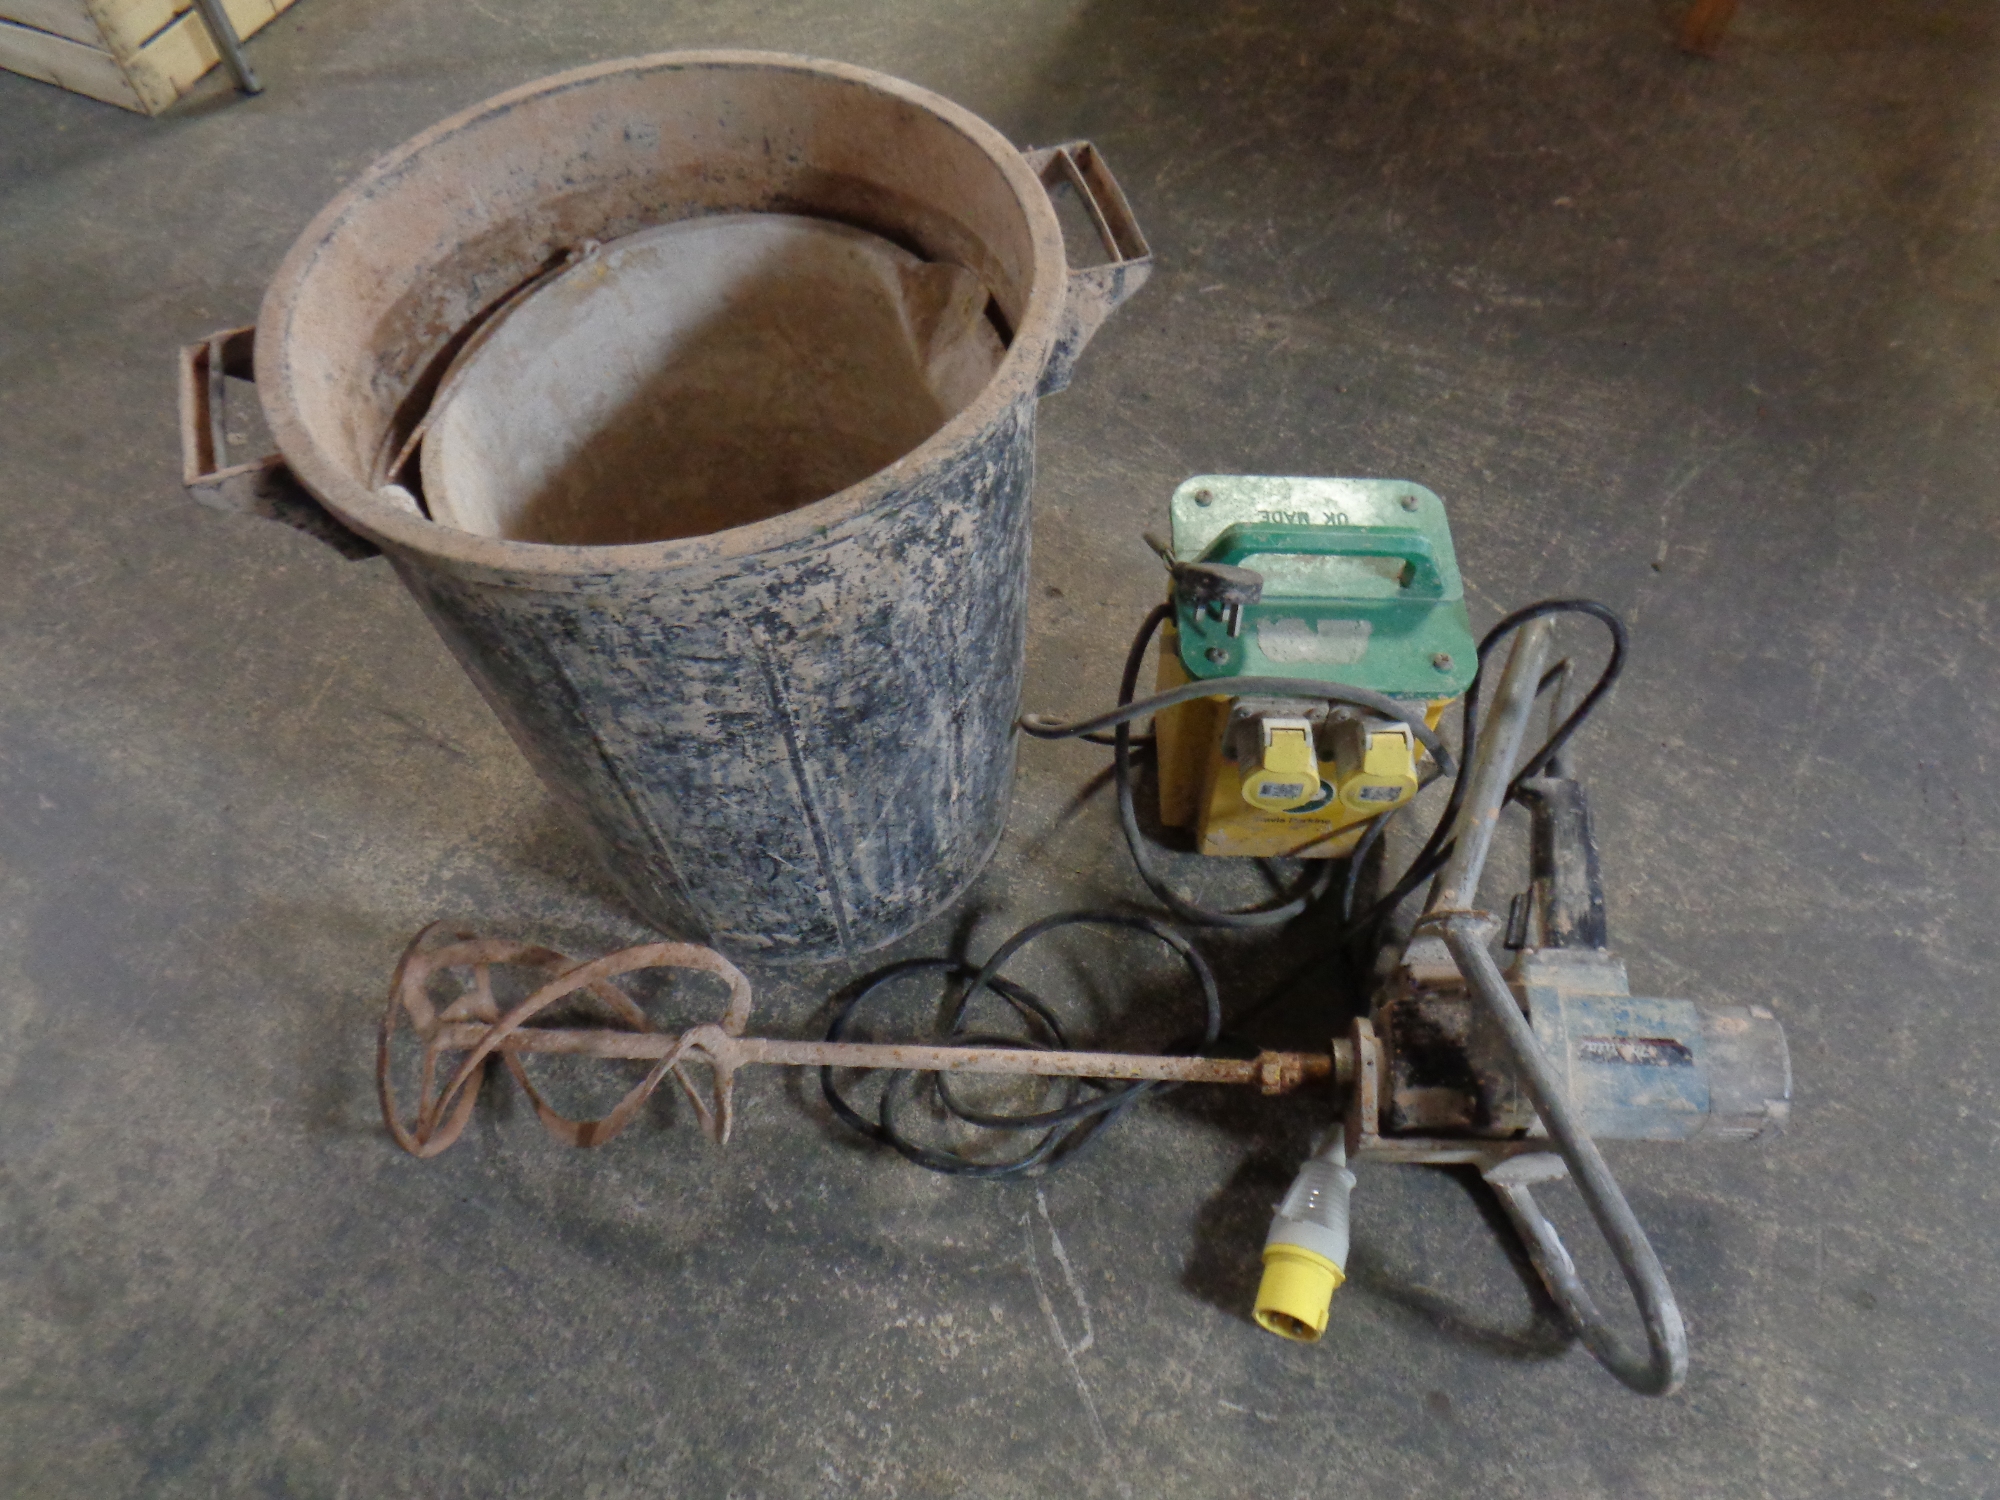 A Makita 110v plastering mixer with bucket and 110v transformer